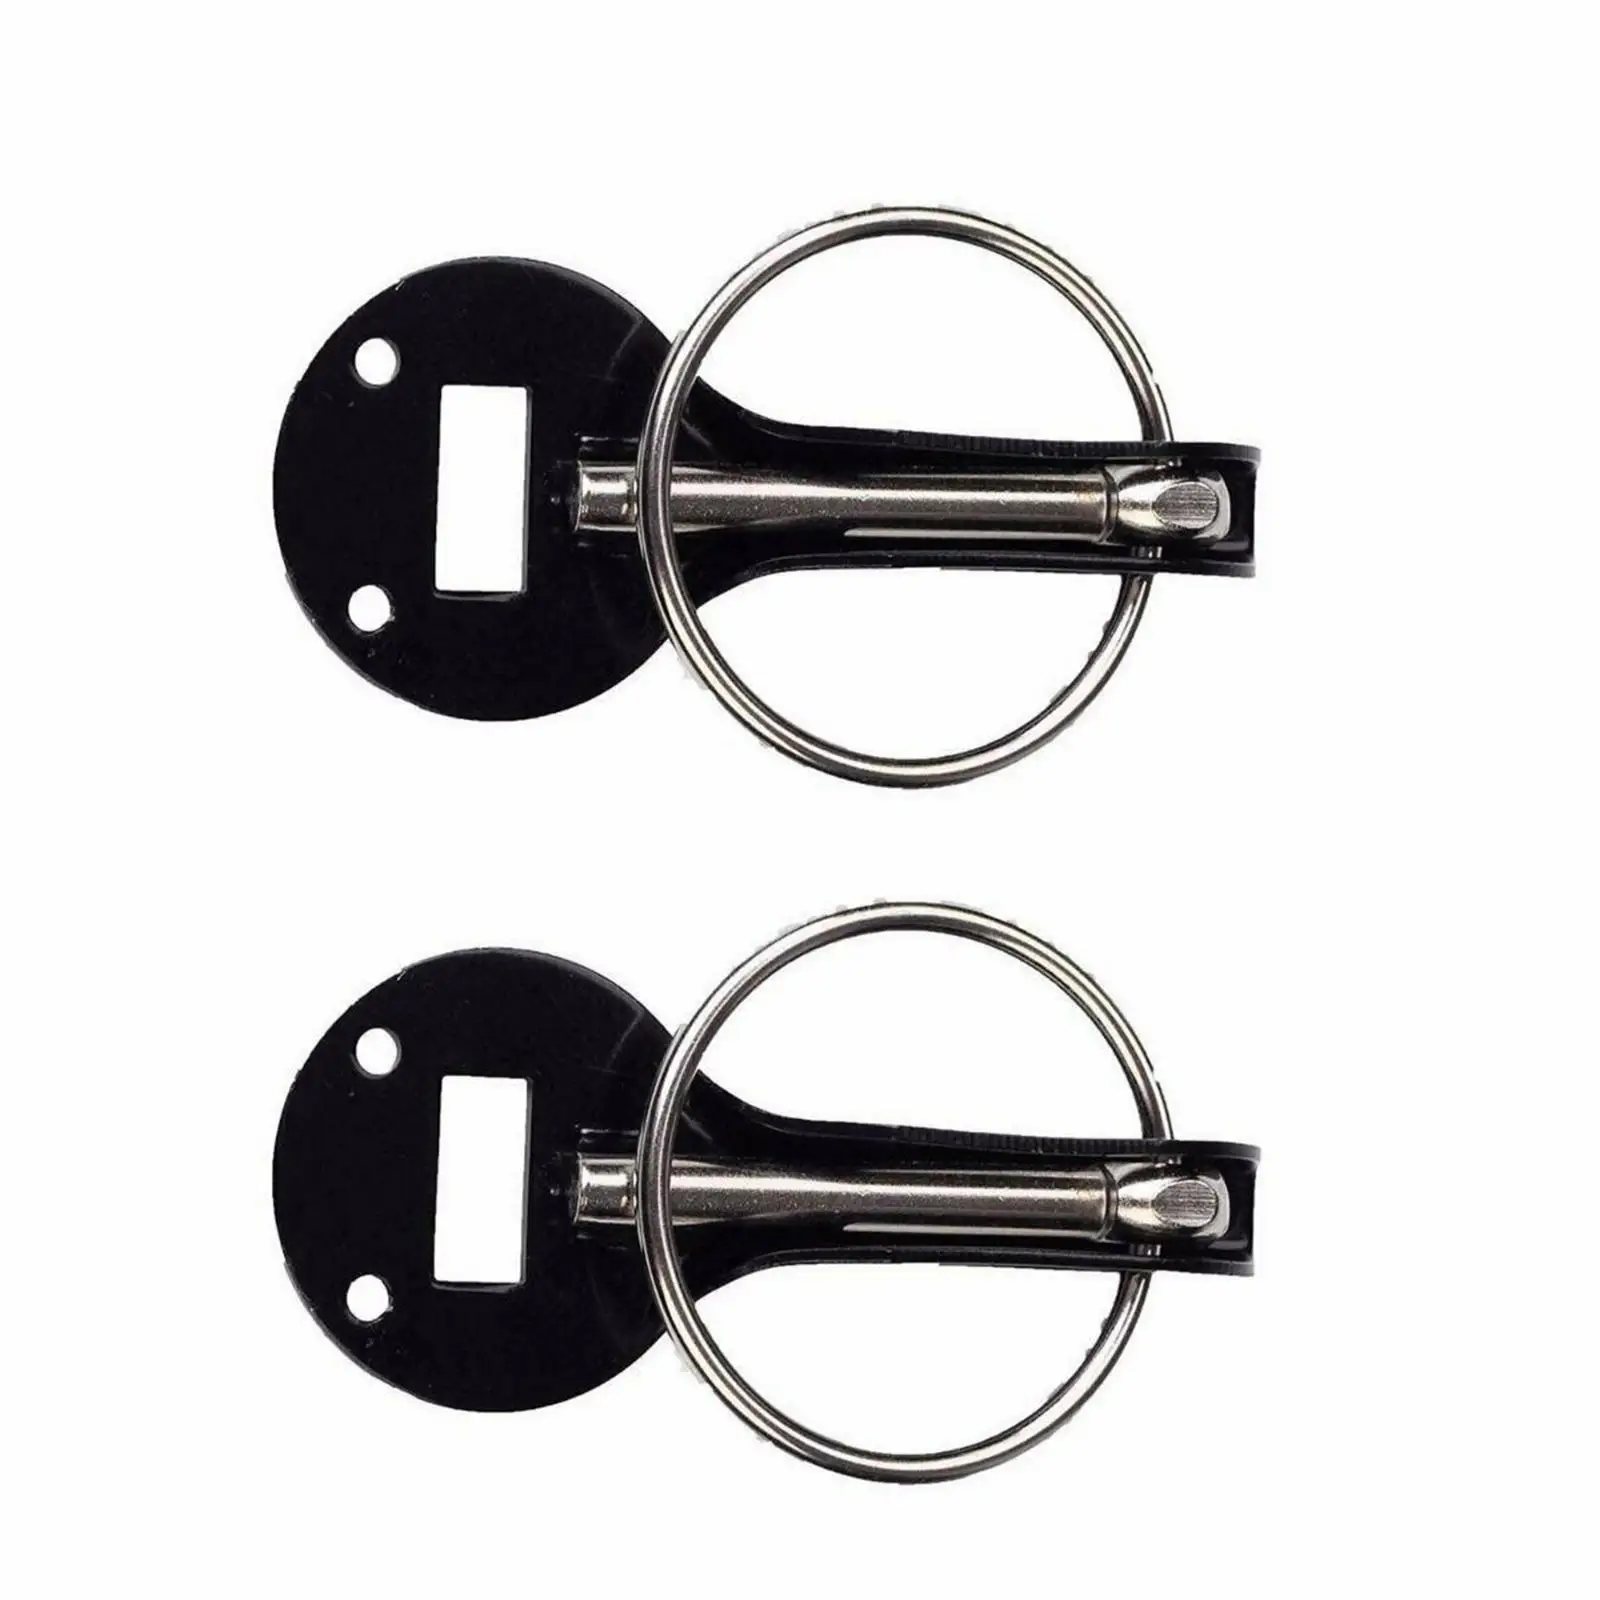 Hood Pin Lock Kit Cylindrical Key Lock Metal Hood Lock Latch Kit for Racing Car